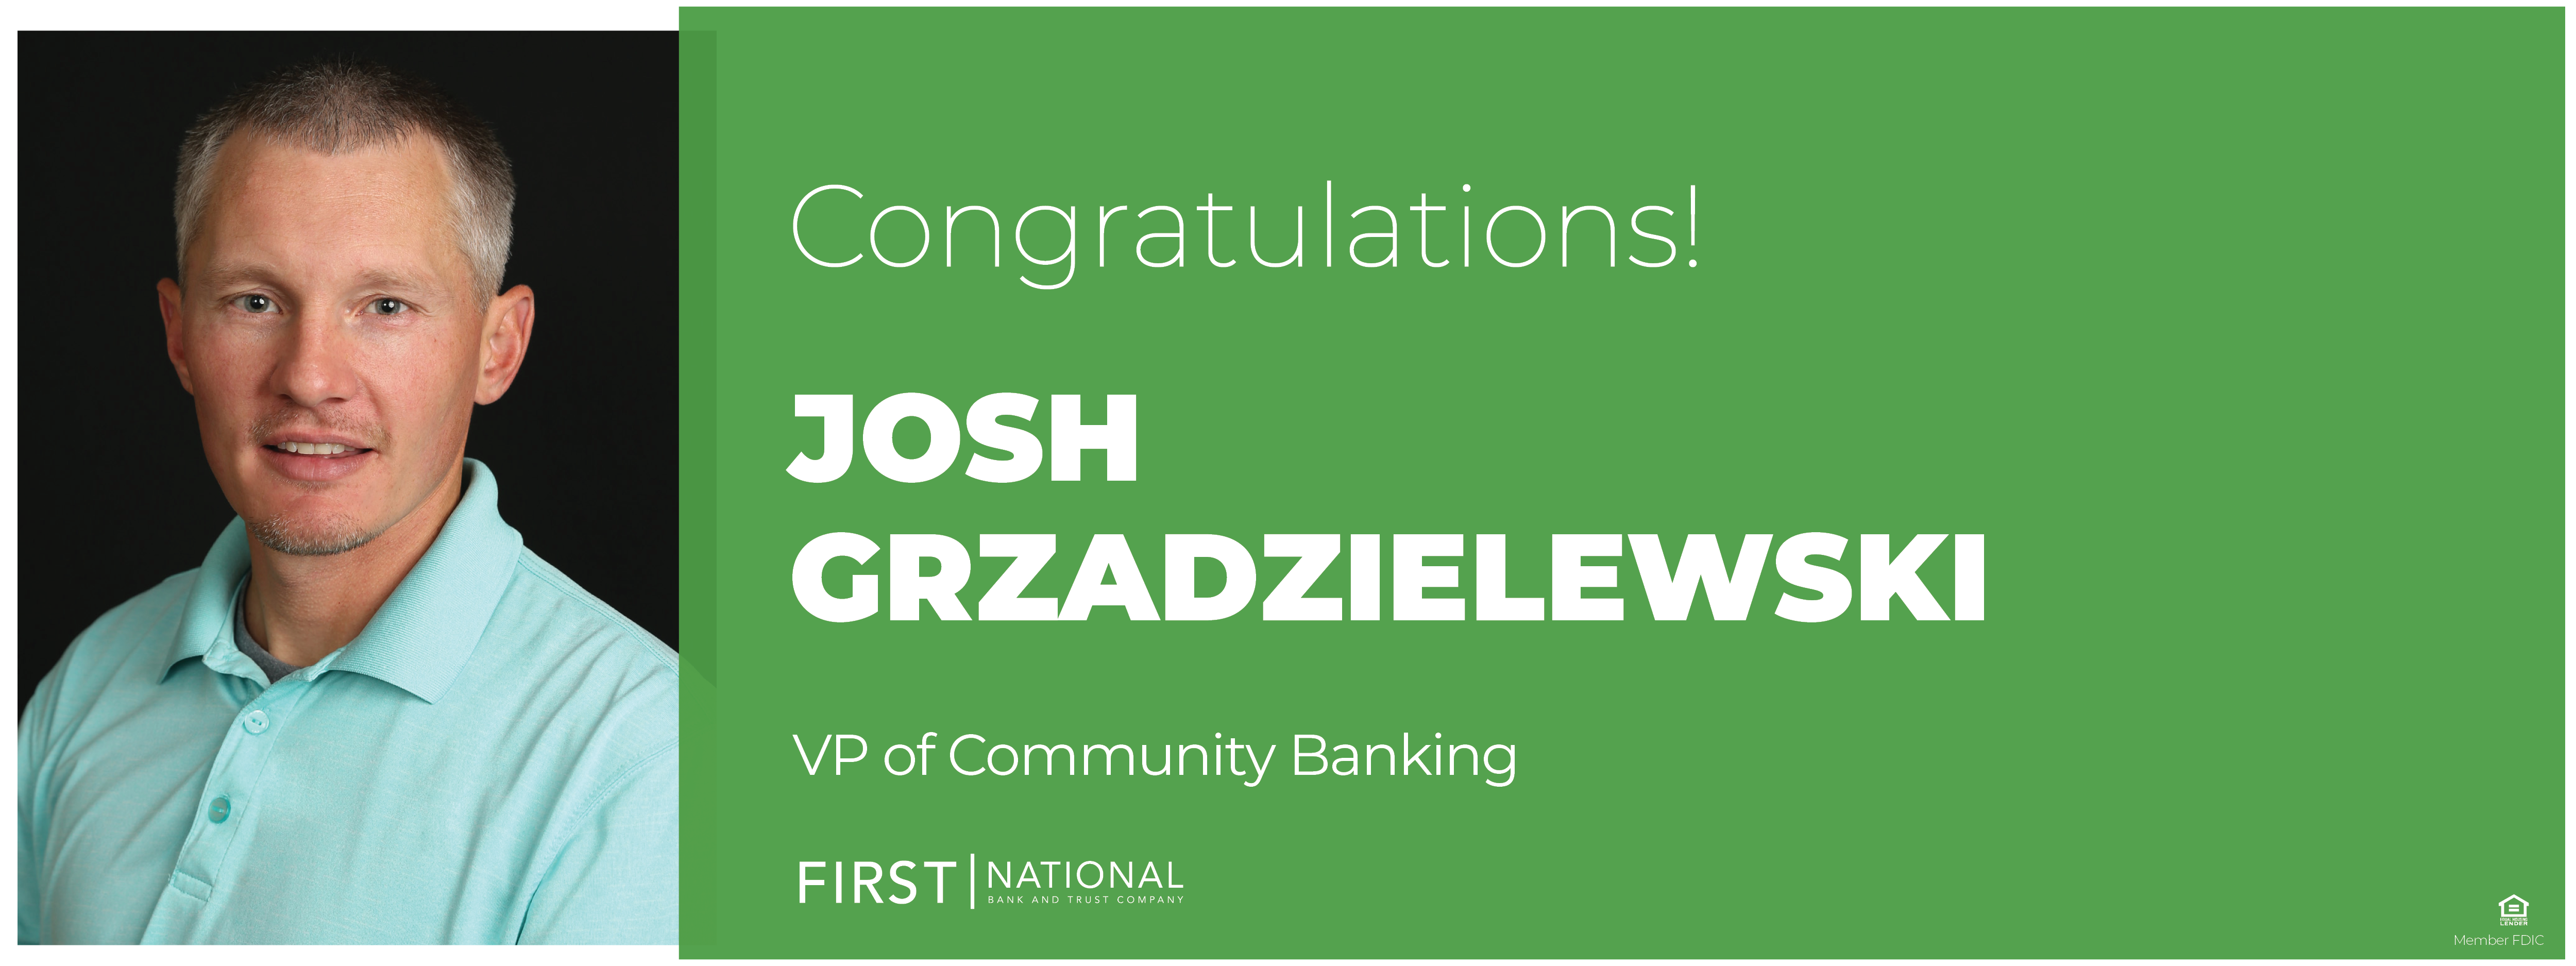 Congratulations Josh Grzadzielewski